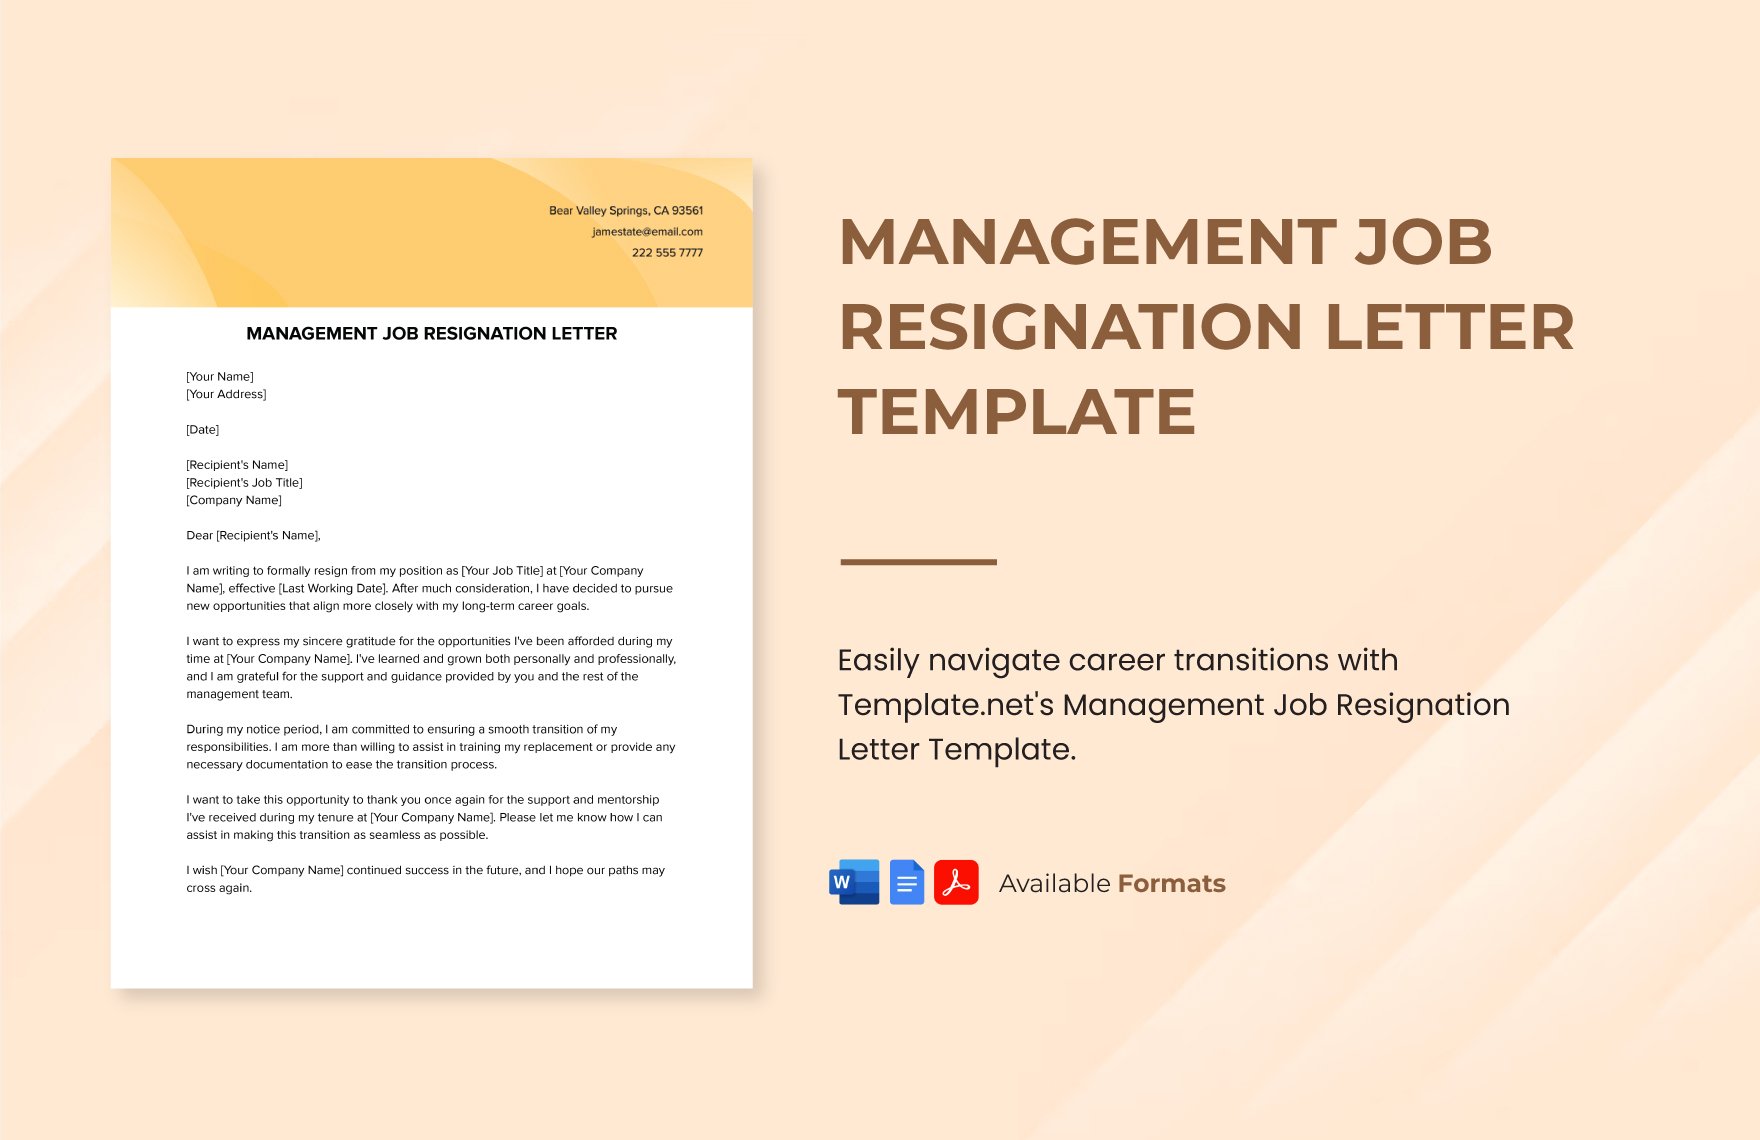 Management Job Resignation Letter Template in Word, Google Docs, PDF